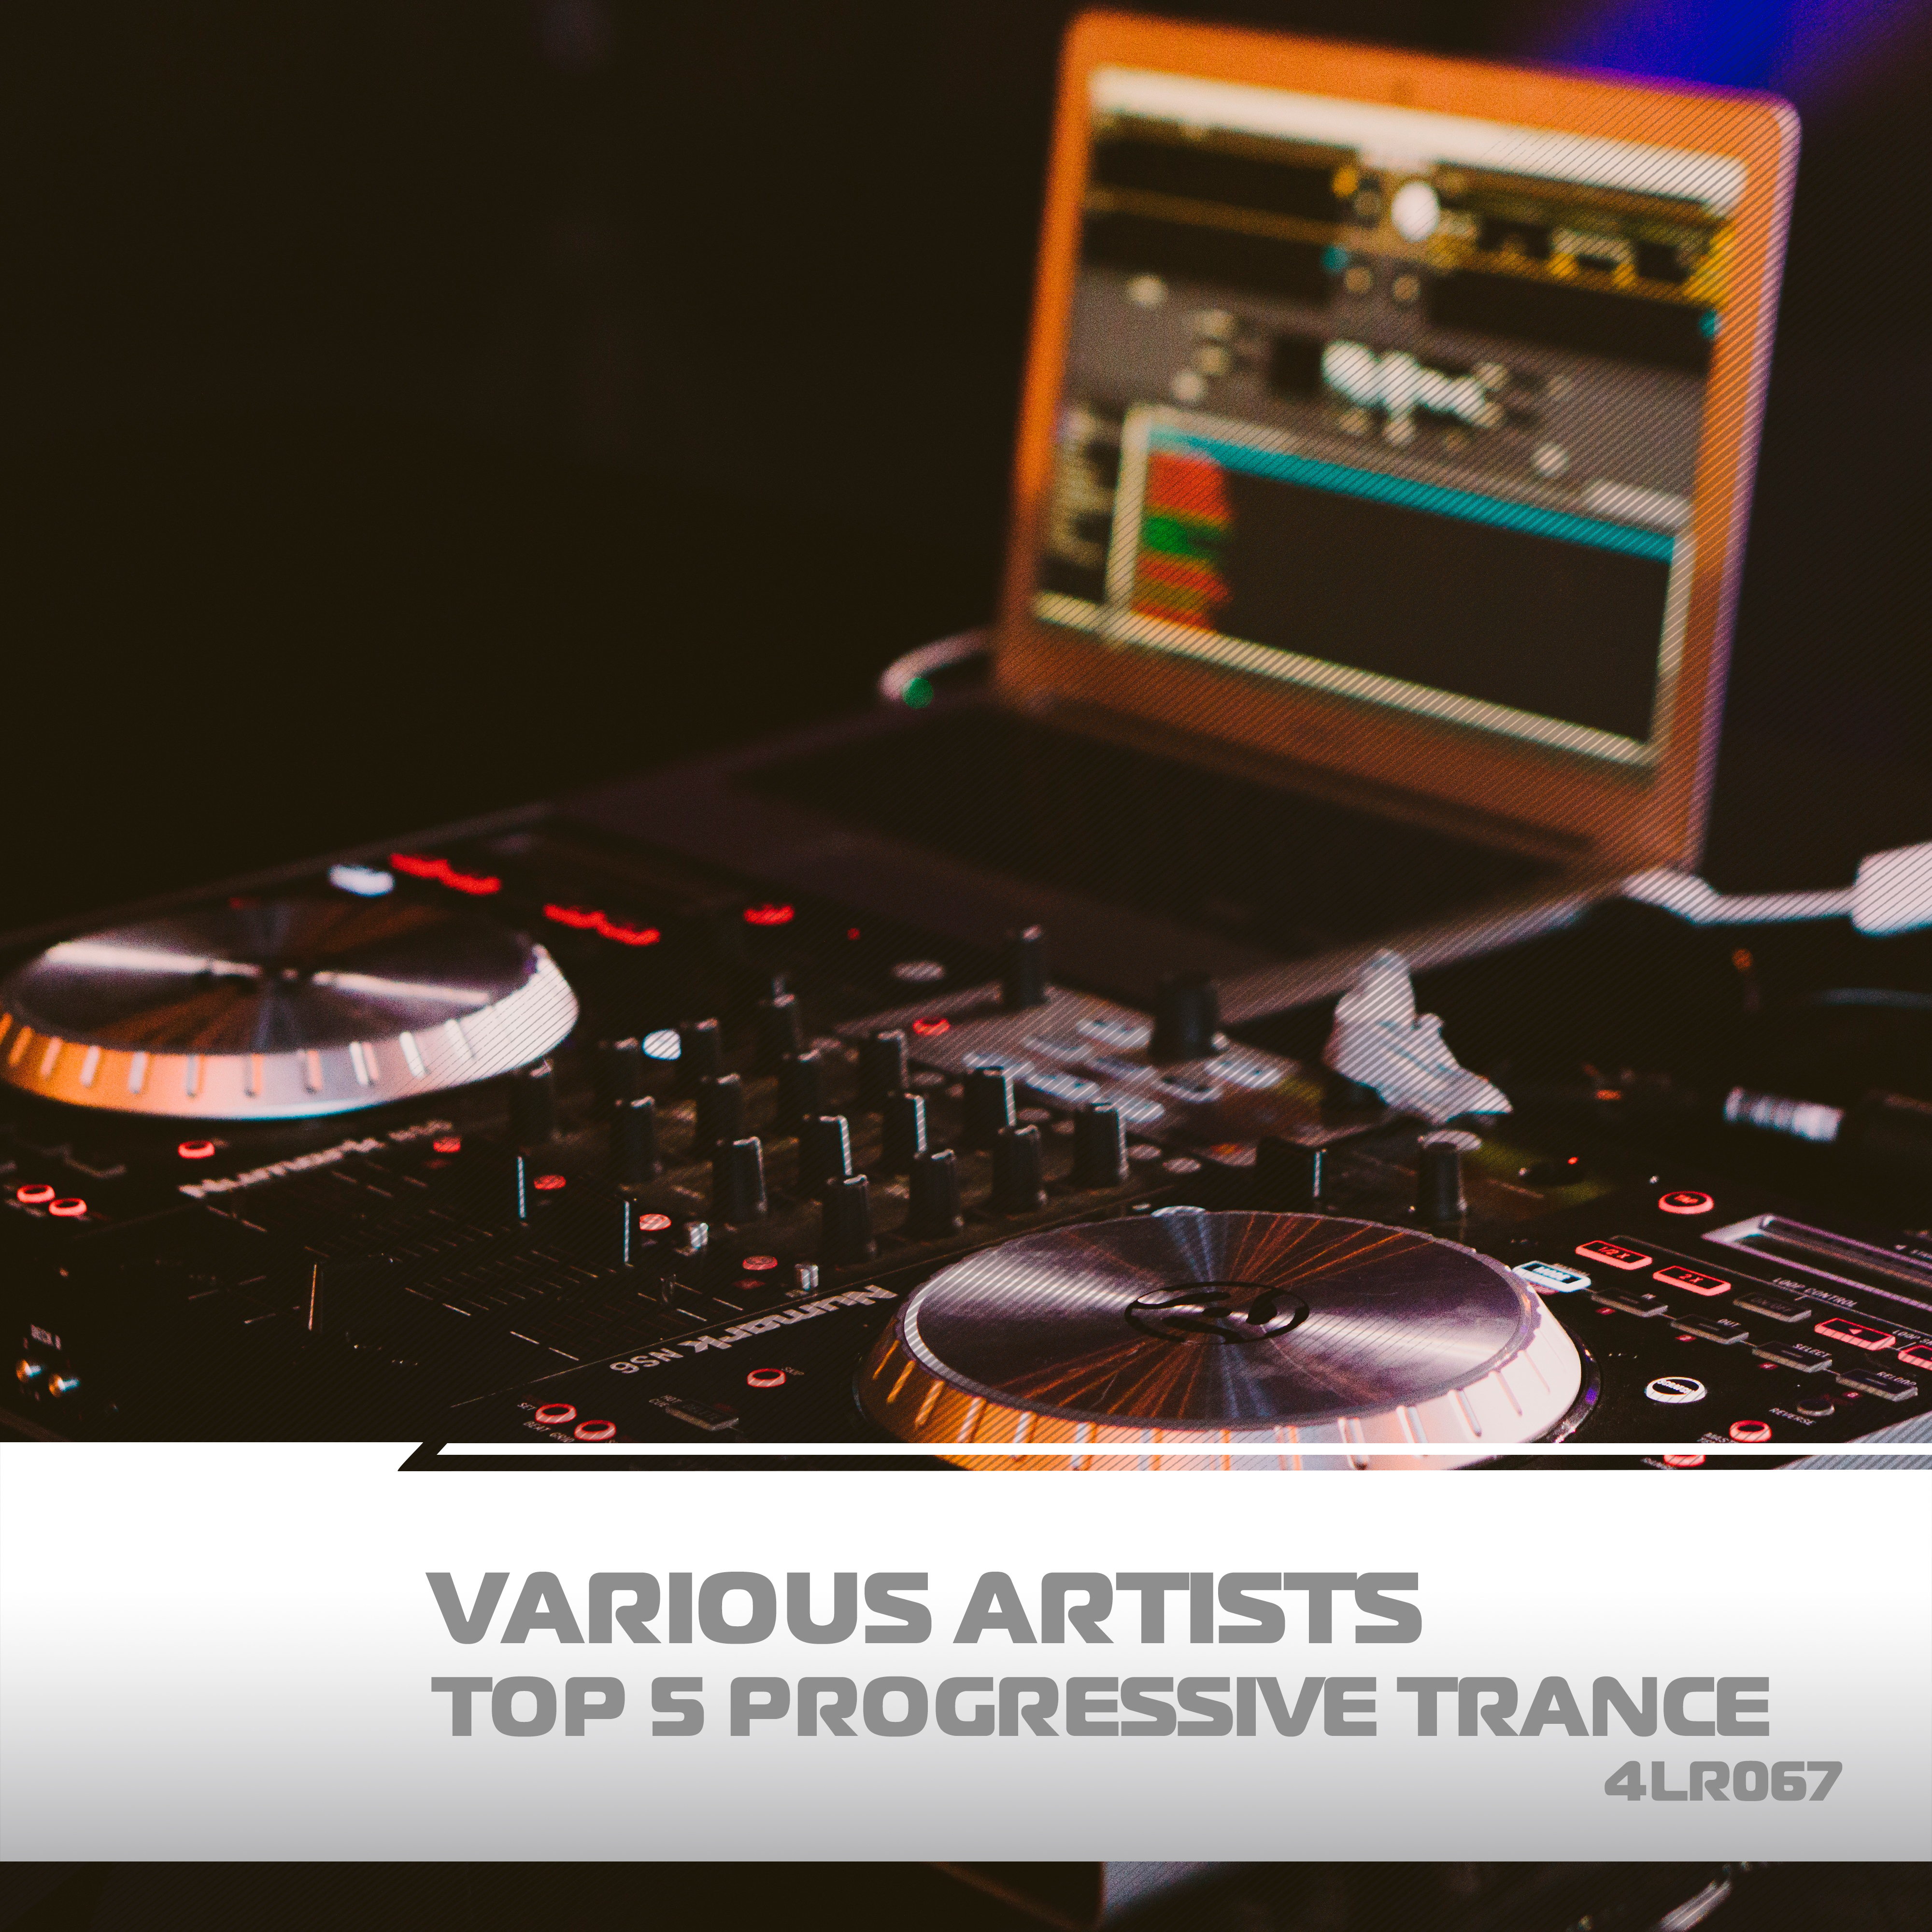 Top 5 Progressive Trance